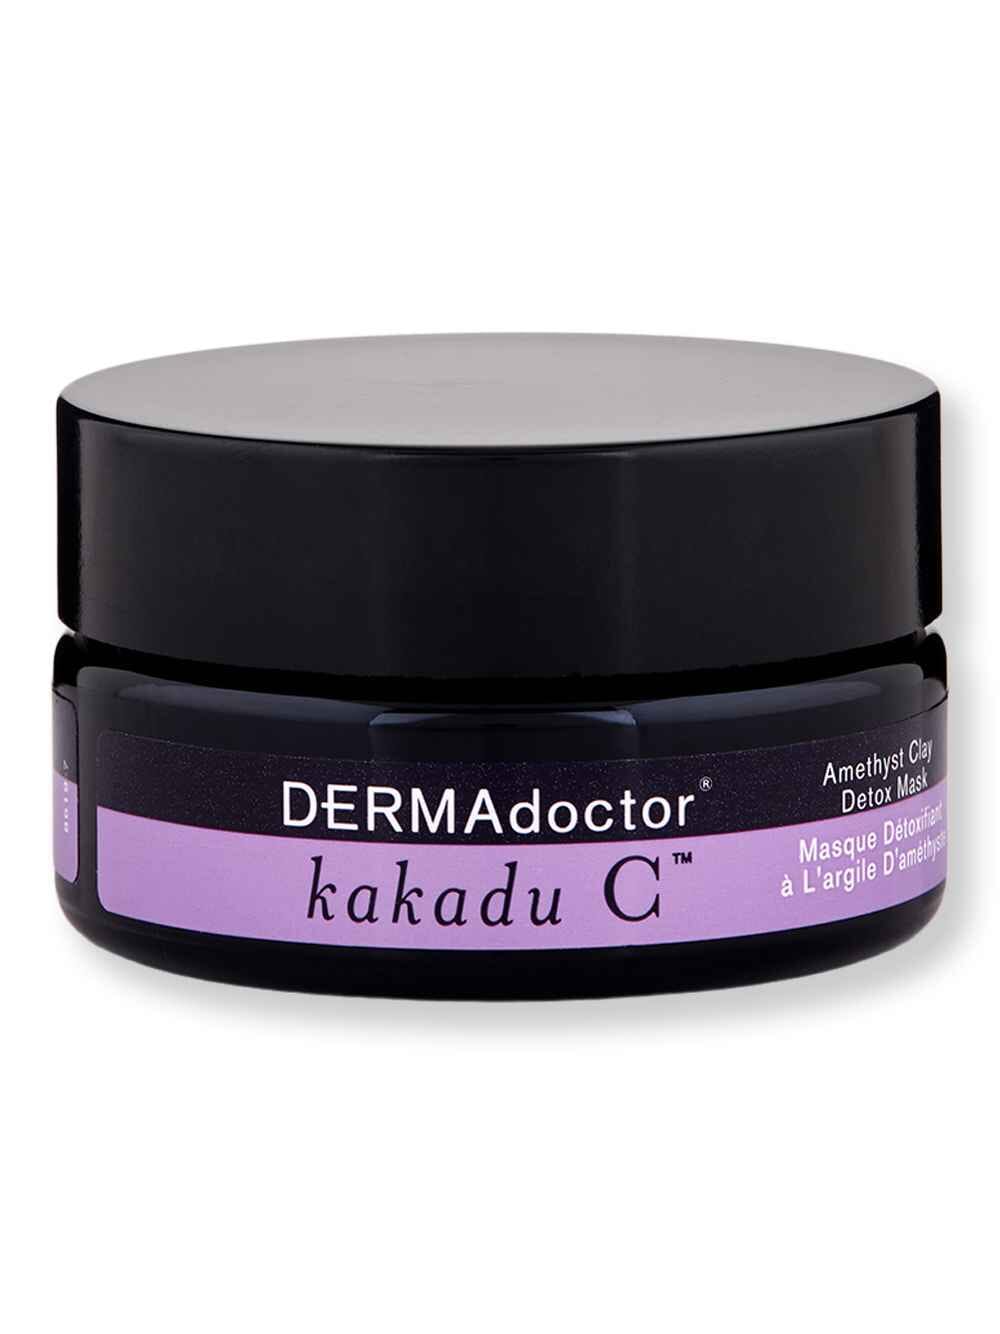 DermaDoctor DermaDoctor Kakadu C Amethyst Clay Detox Mask 1.7 oz50 ml Face Masks 